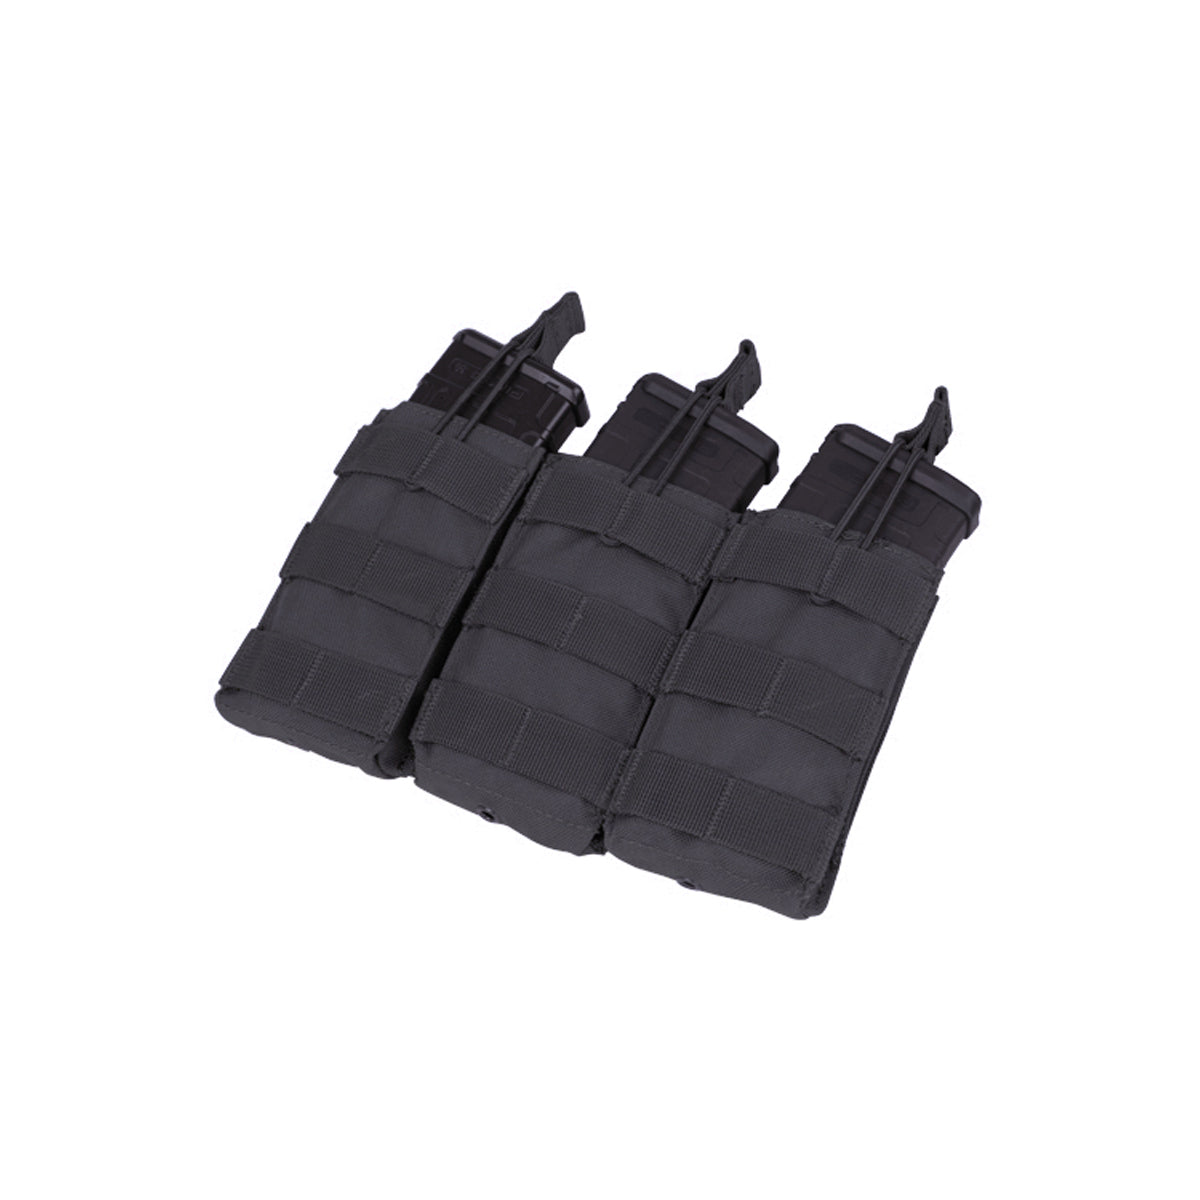 M16 Triple mag pouch, Open-top, Black